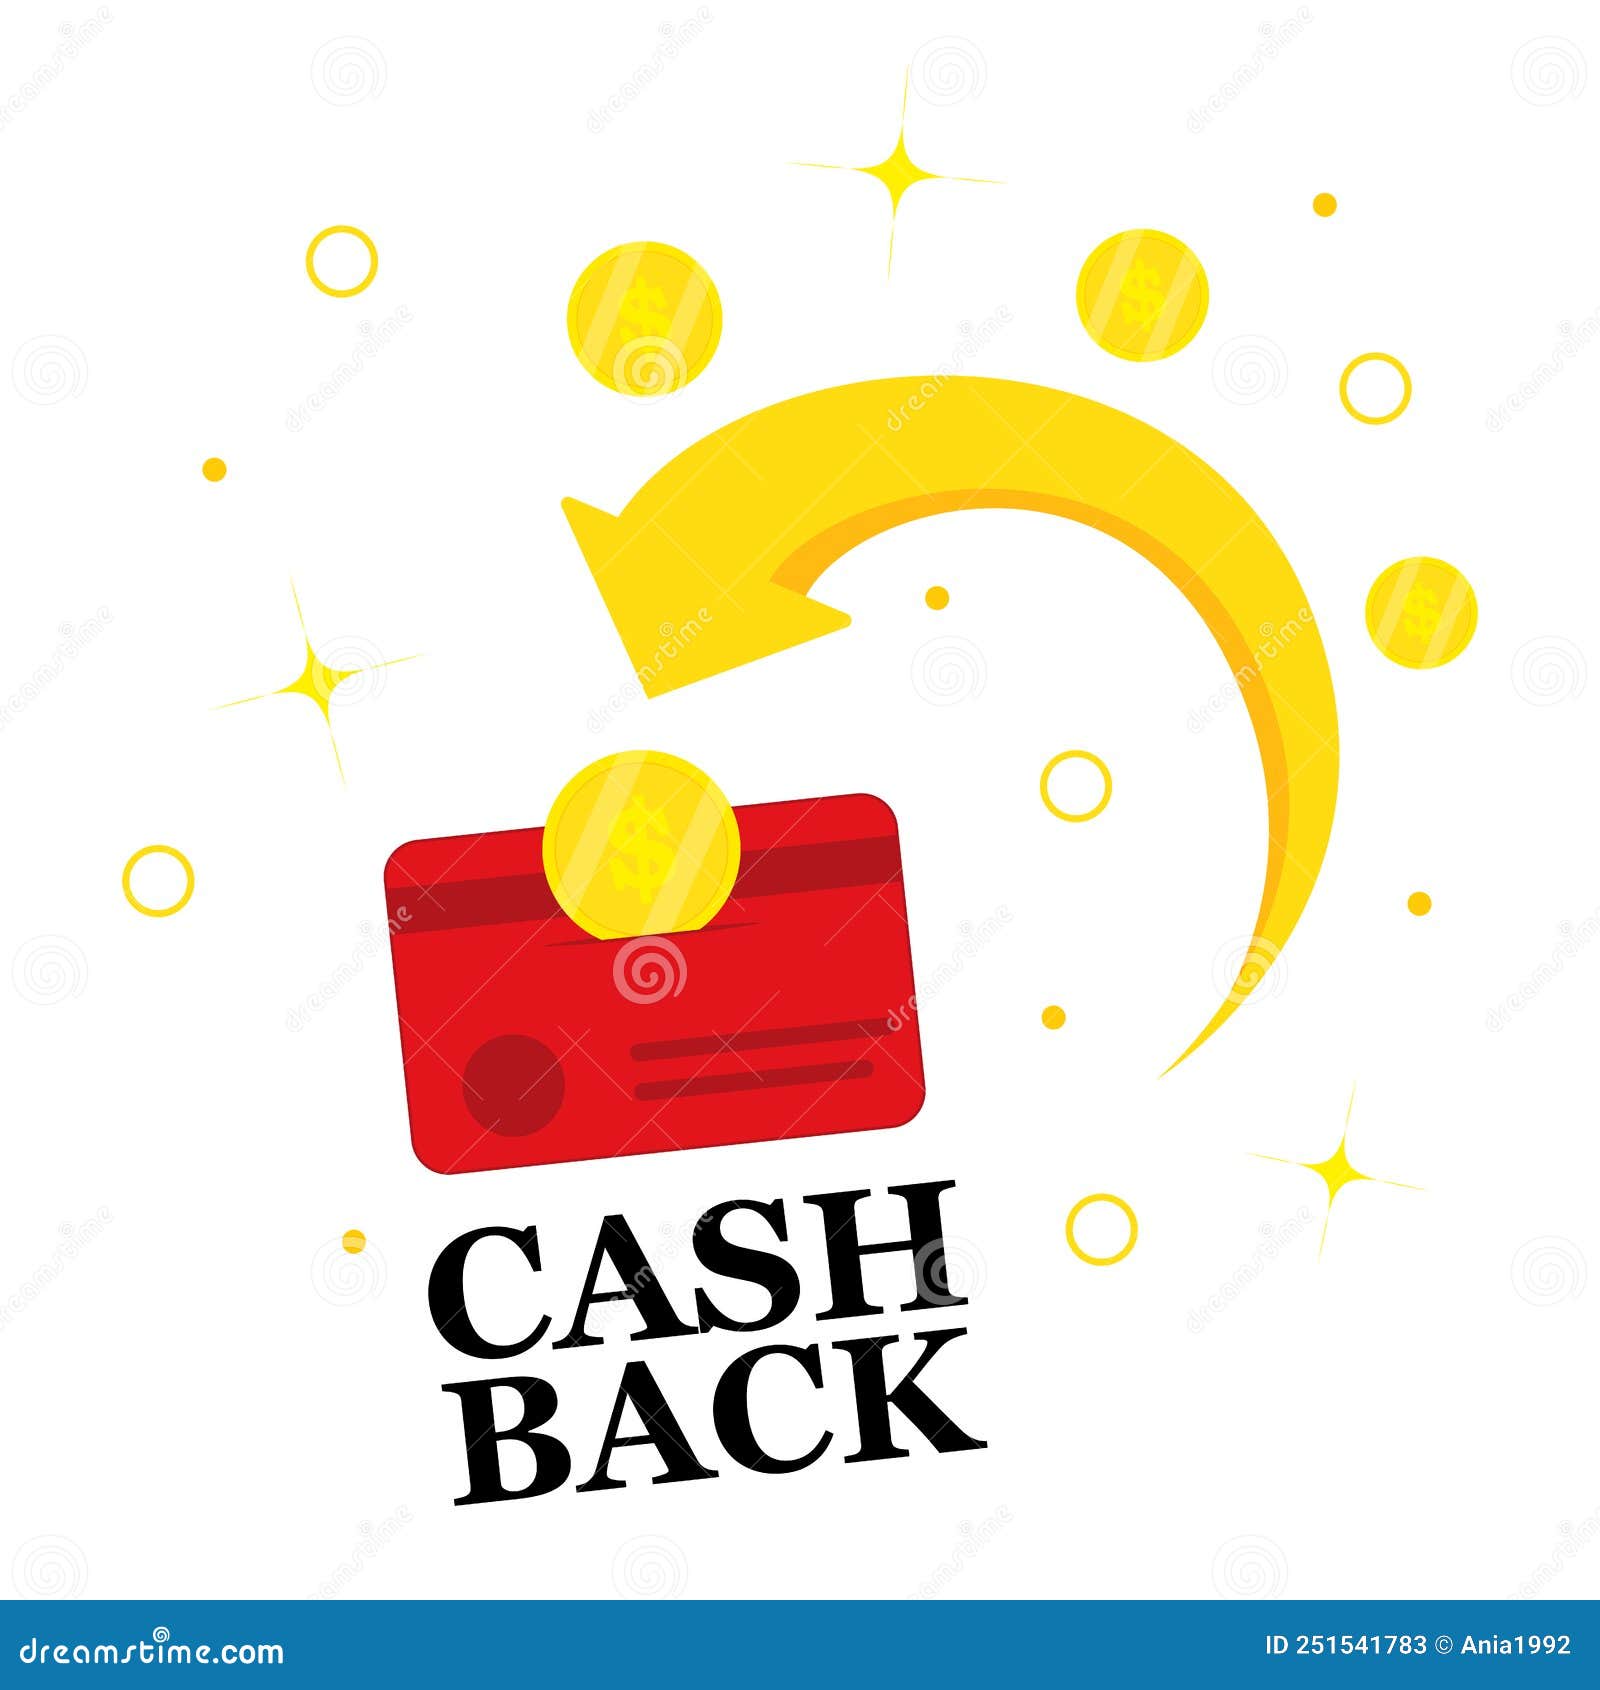 Programa de fidelización con cashback